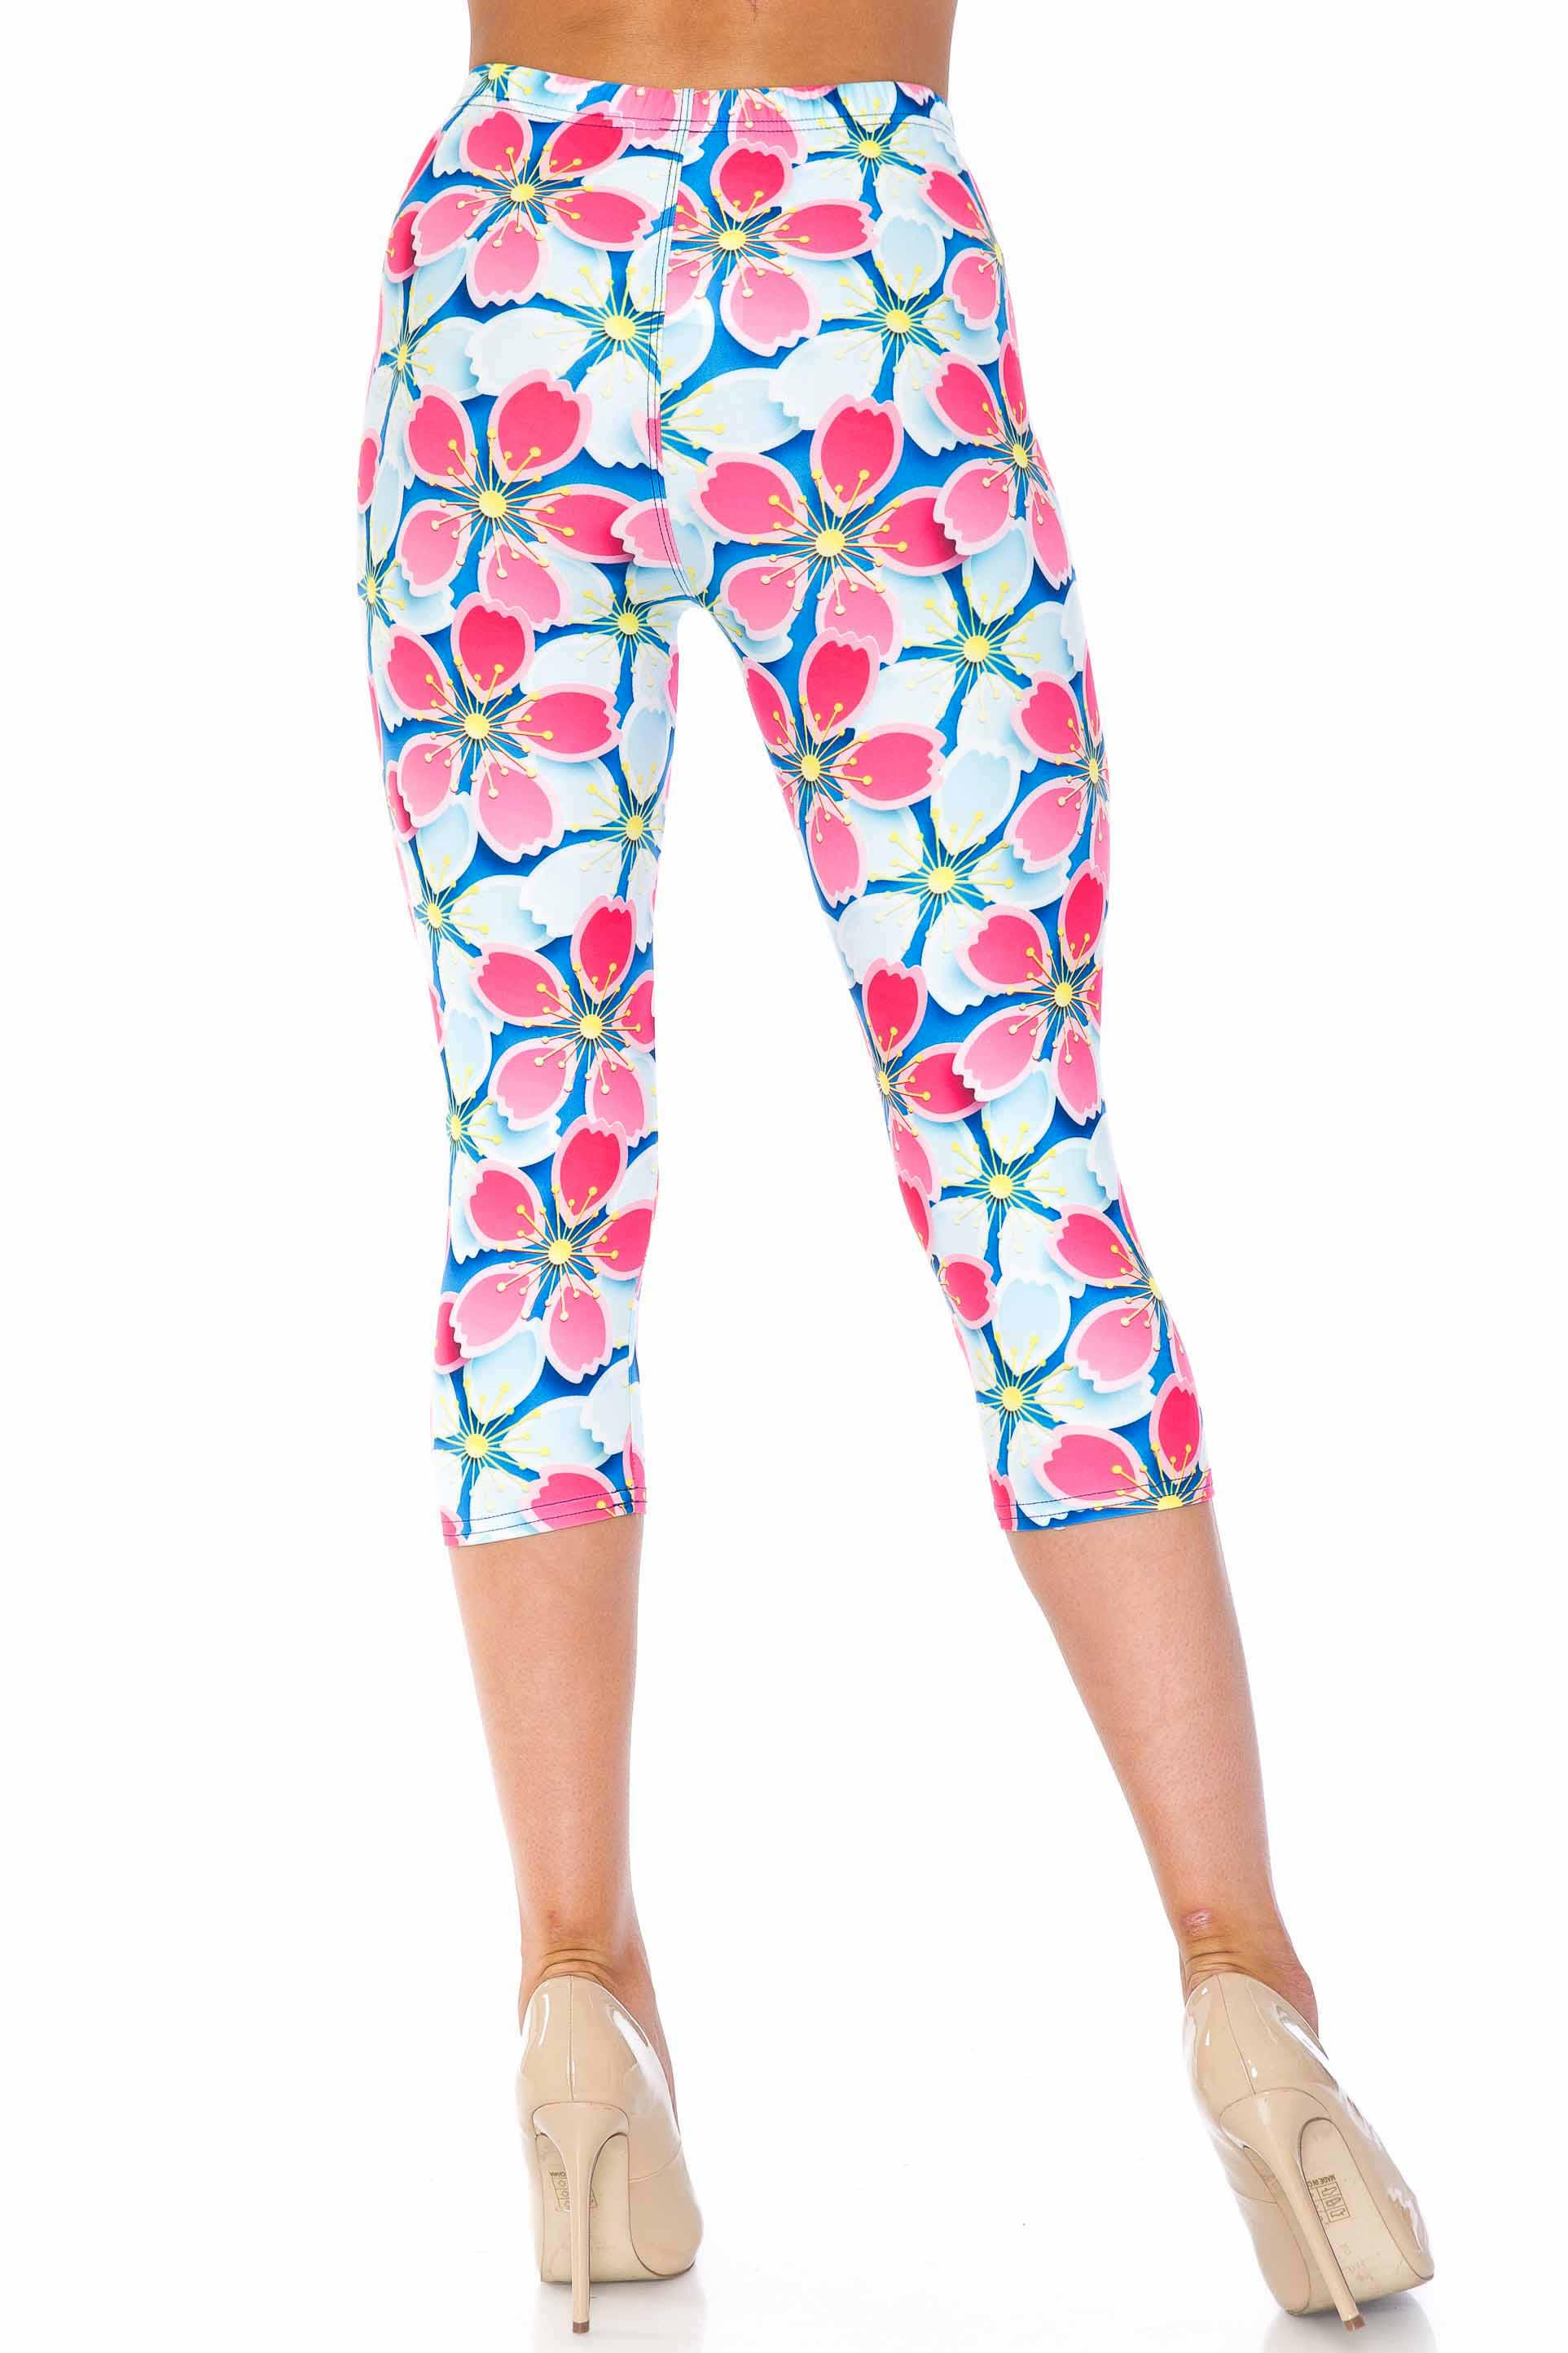 Wholesale Creamy Soft Pink and Blue Sunshine Floral Capris - USA Fashion™